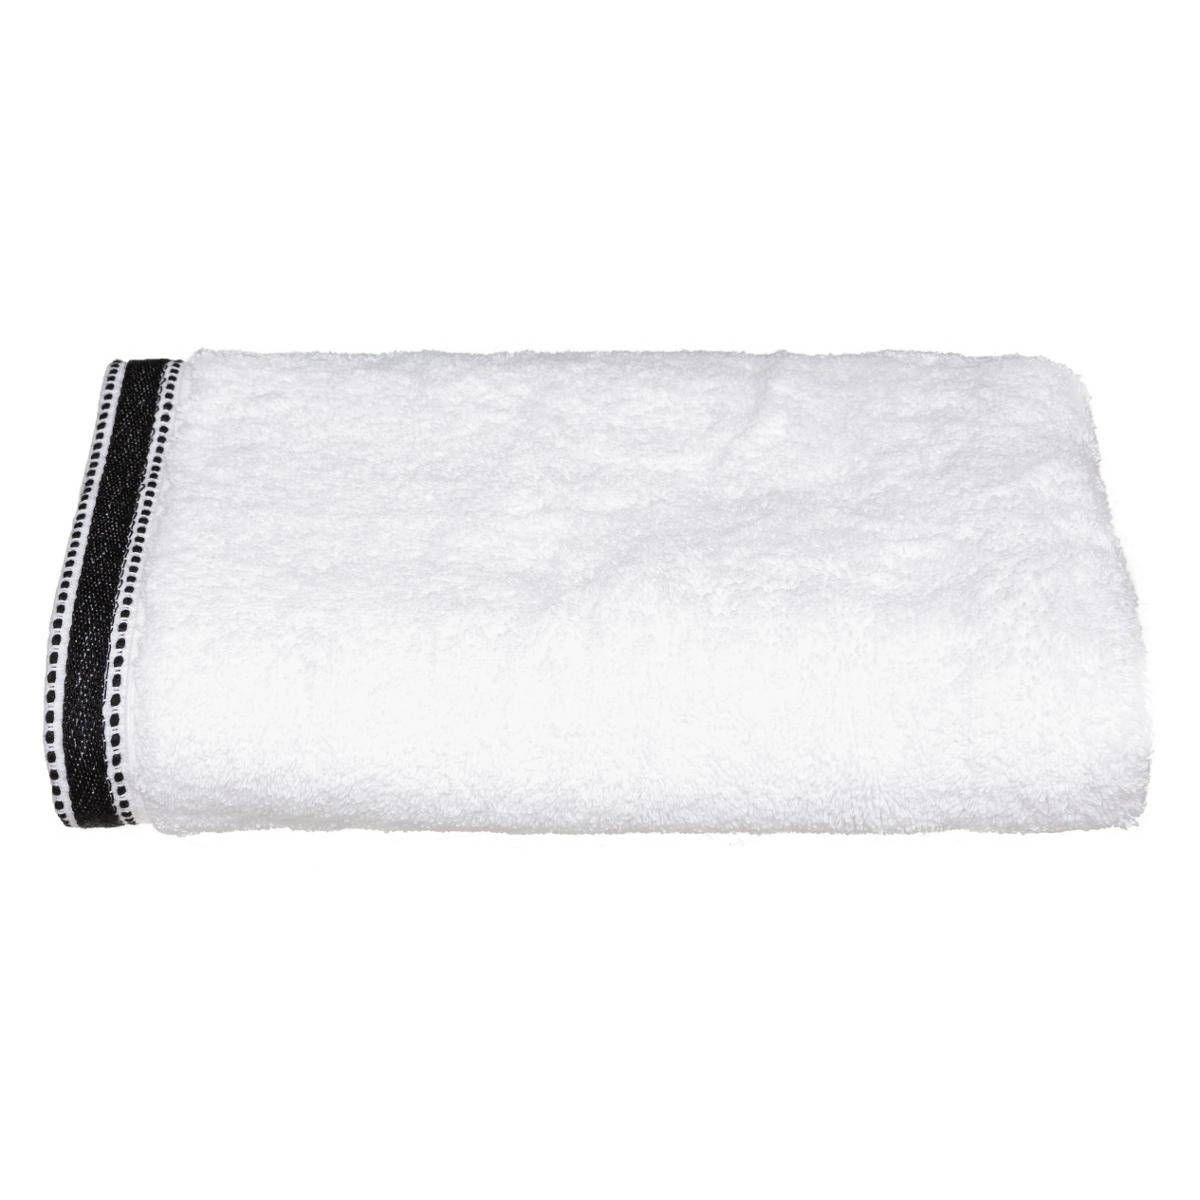 Atmosphera Bavlněný ručník JOIA, 70 x 130 cm, bílá barva - EDAXO.CZ s.r.o.